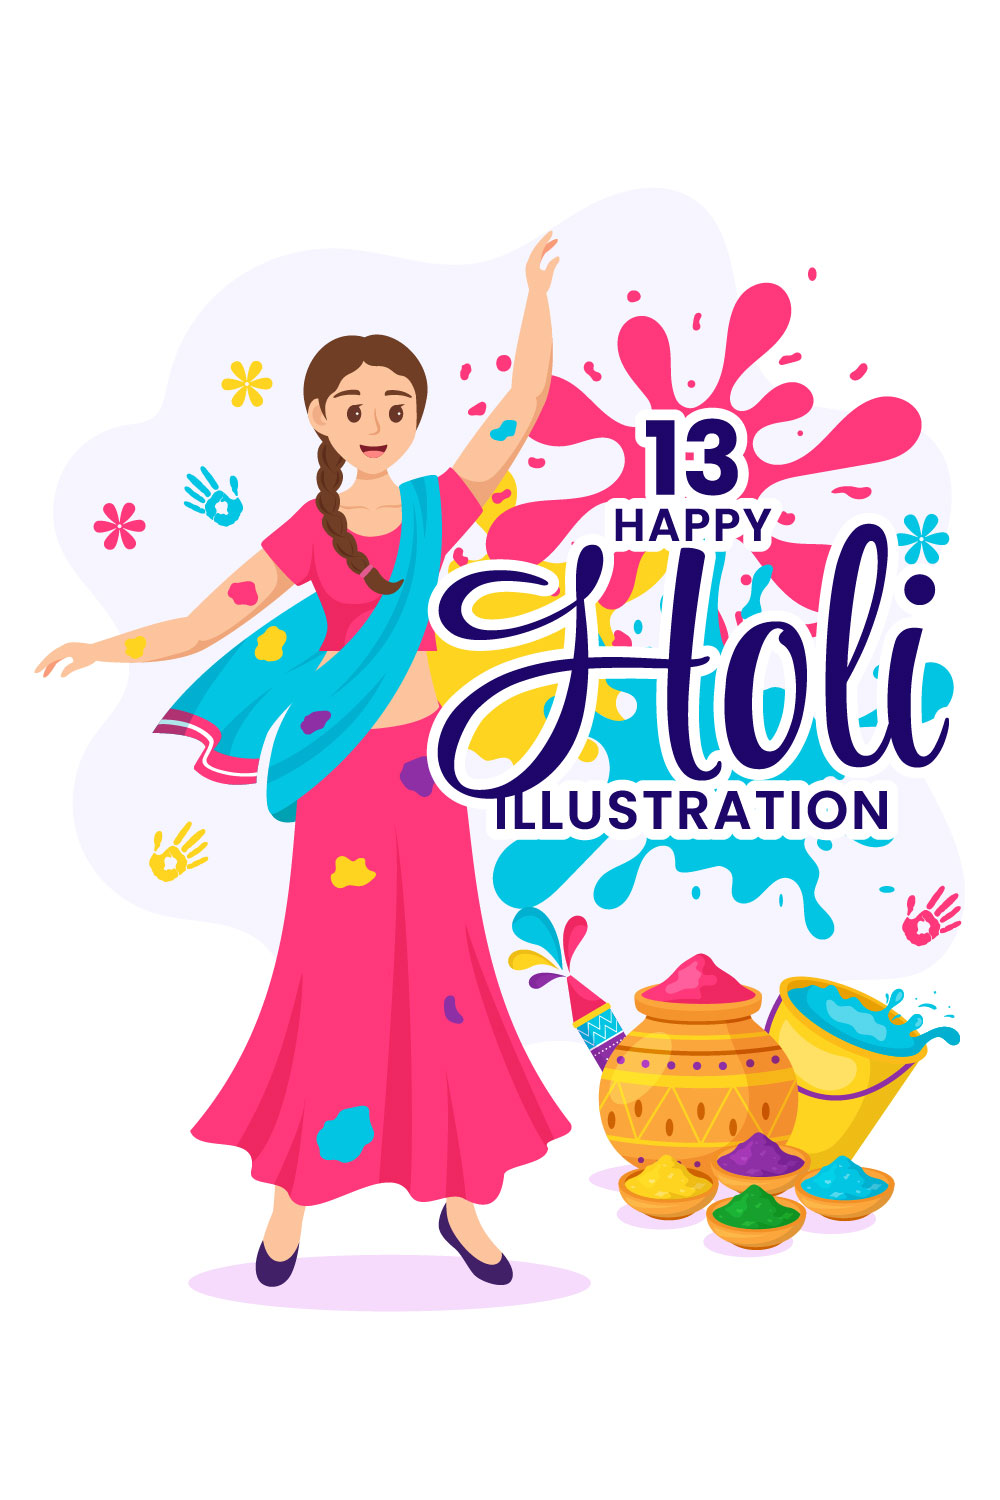 13 Happy Holi Festival Illustration pinterest preview image.